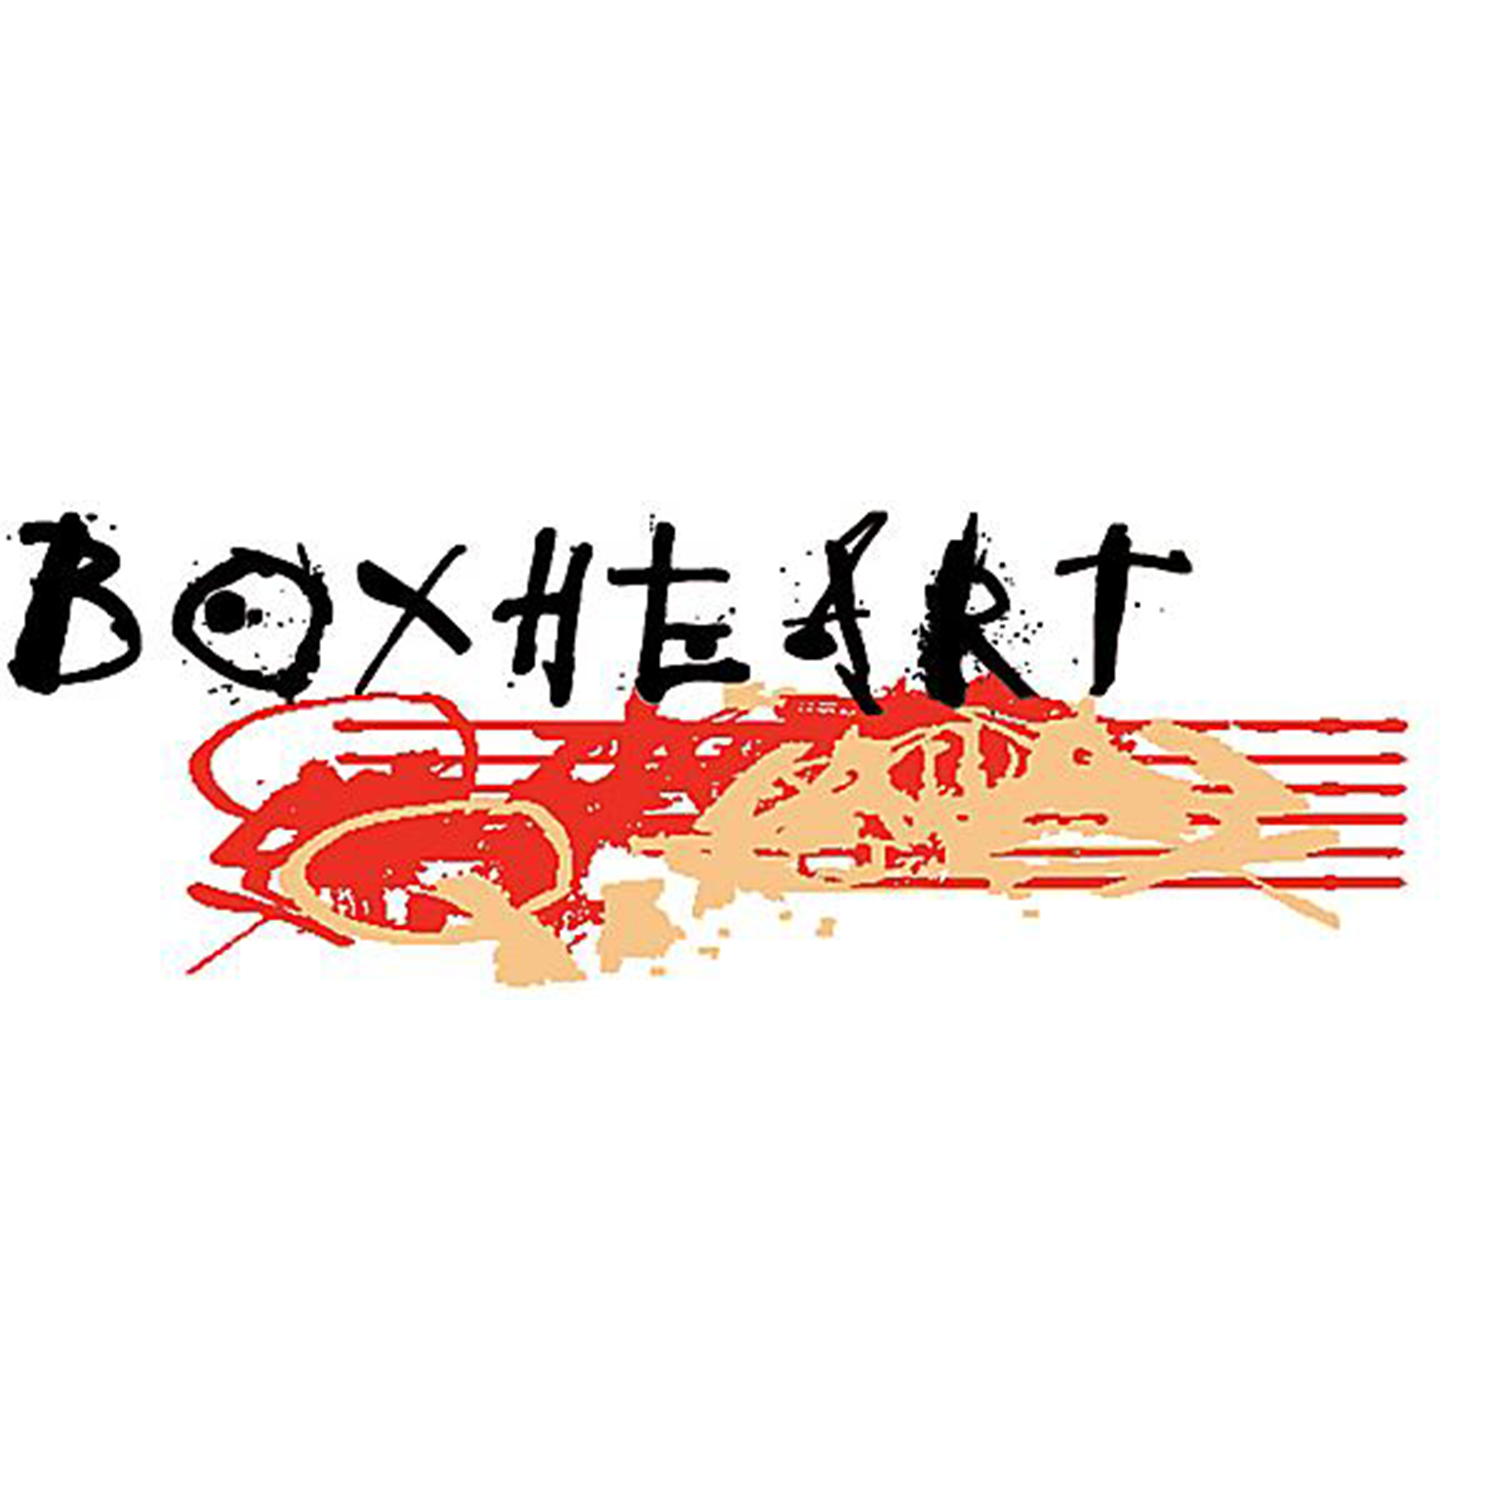 Boxheart.png